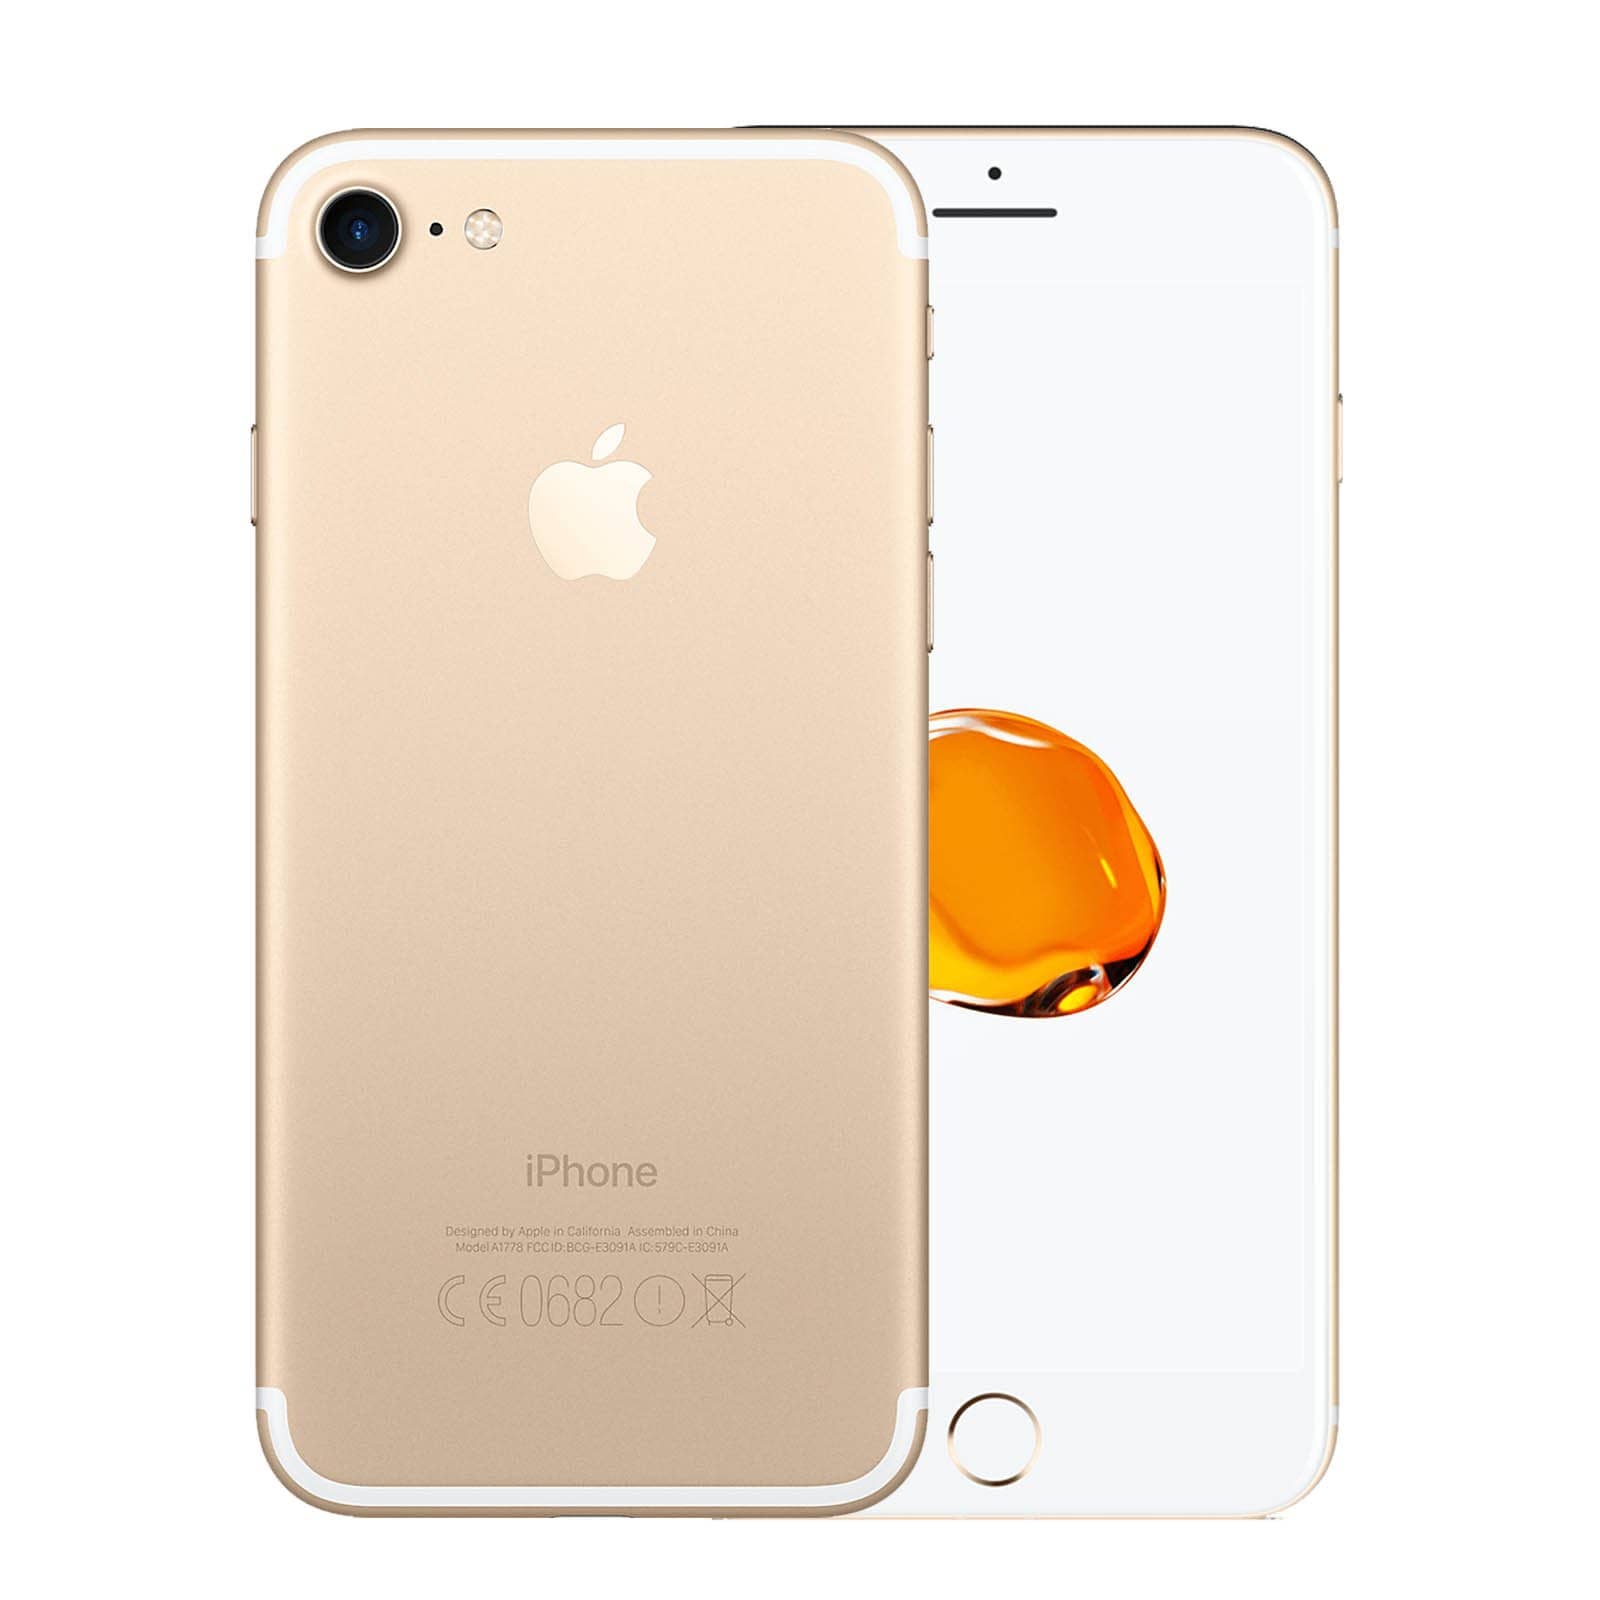 Apple iPhone 7 128GB Gold Good - Unlocked 128GB Gold Good